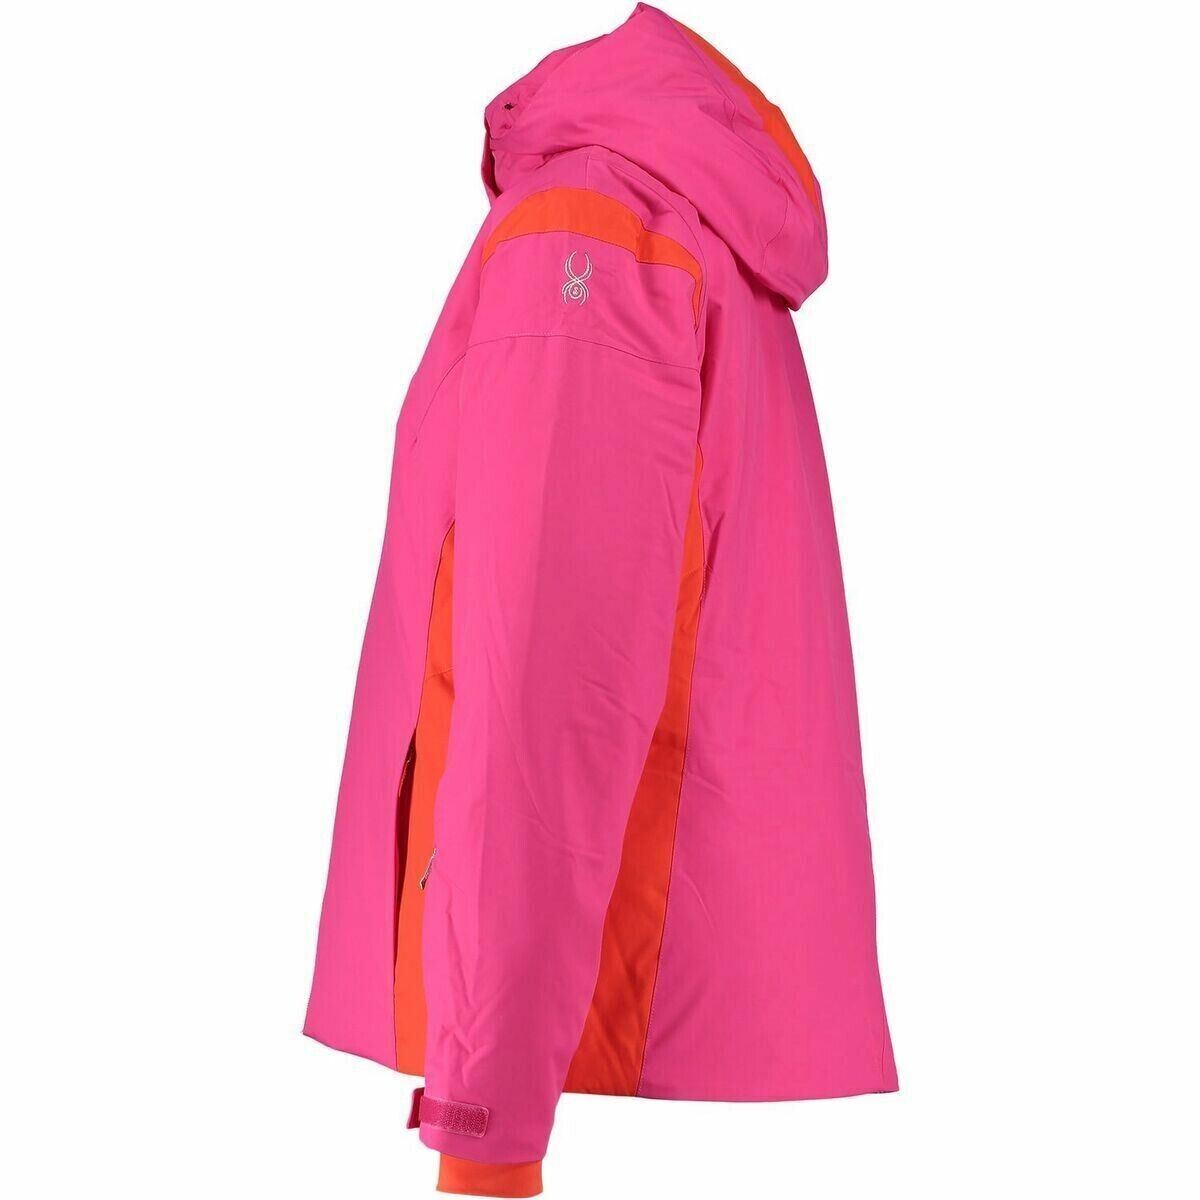 SPYDER Womens PREVAIL Ski Jacket, Pink/Orange, size UK 6